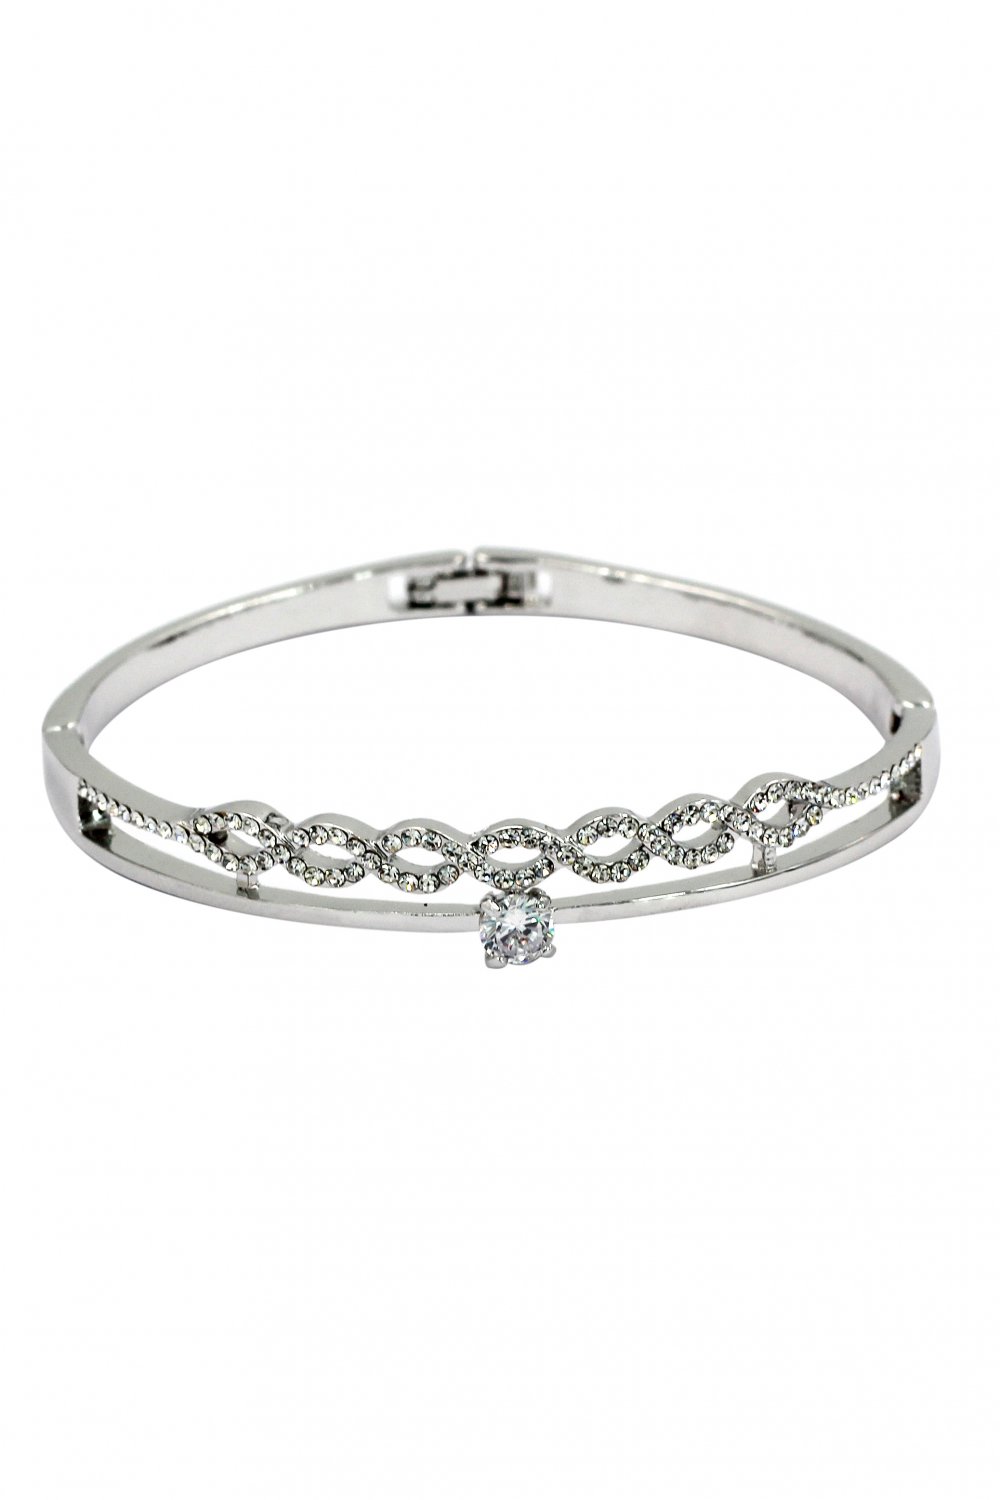 Disposition wave circle crystal silver bracelet